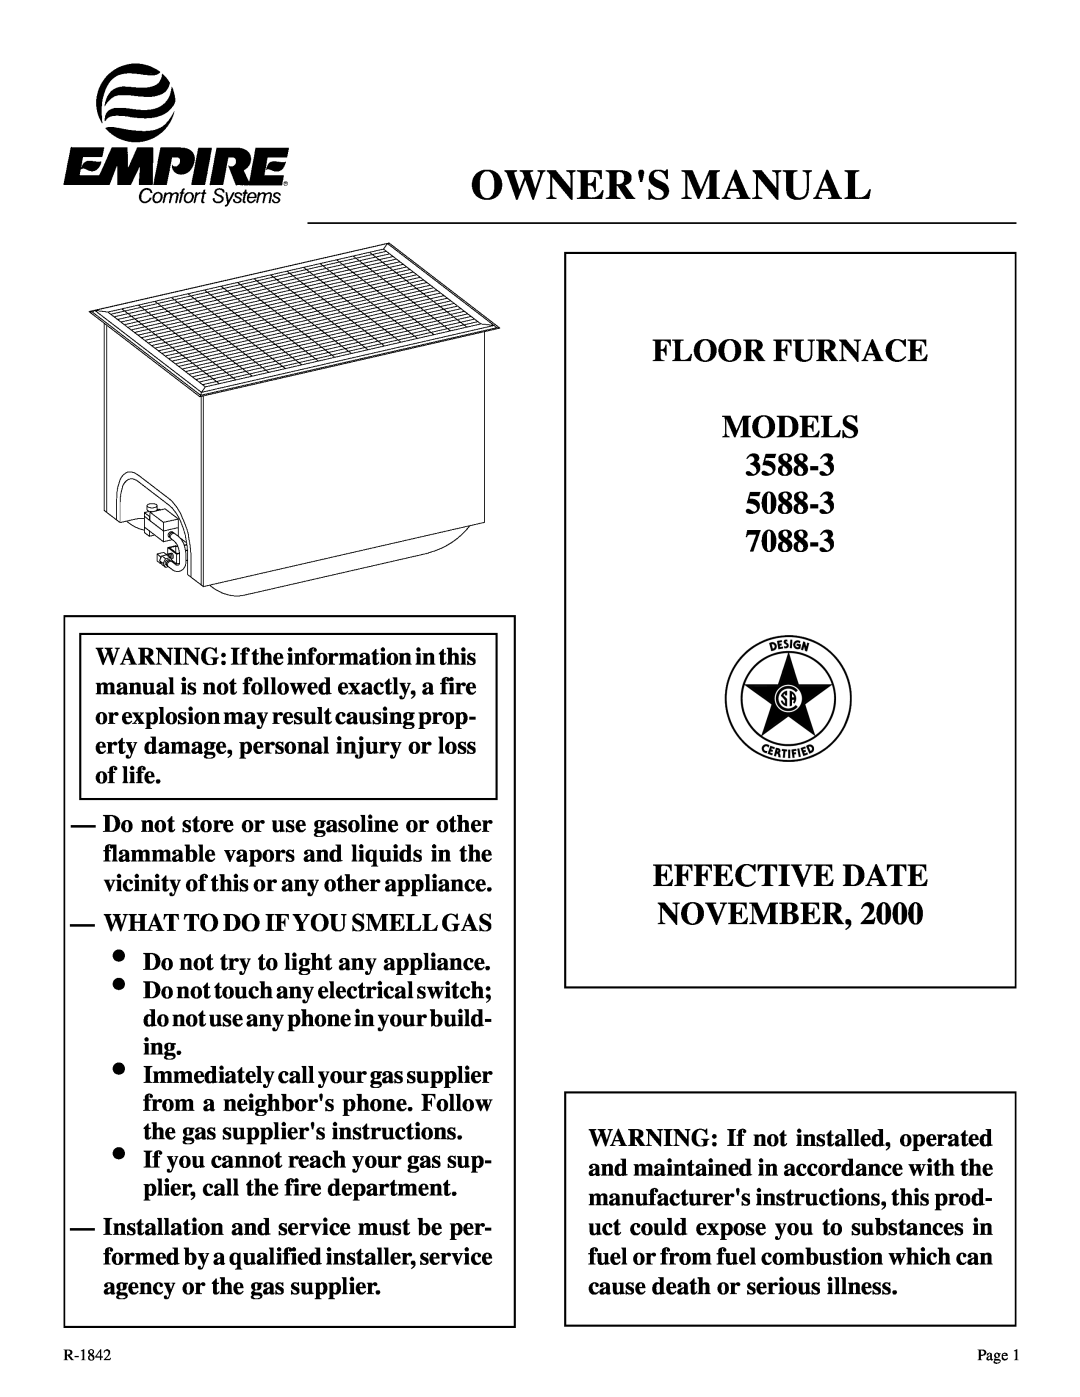 Empire Comfort Systems 7088-3, 3588-3, 5088-3 owner manual Floor Furnace Models, Effective Date November 